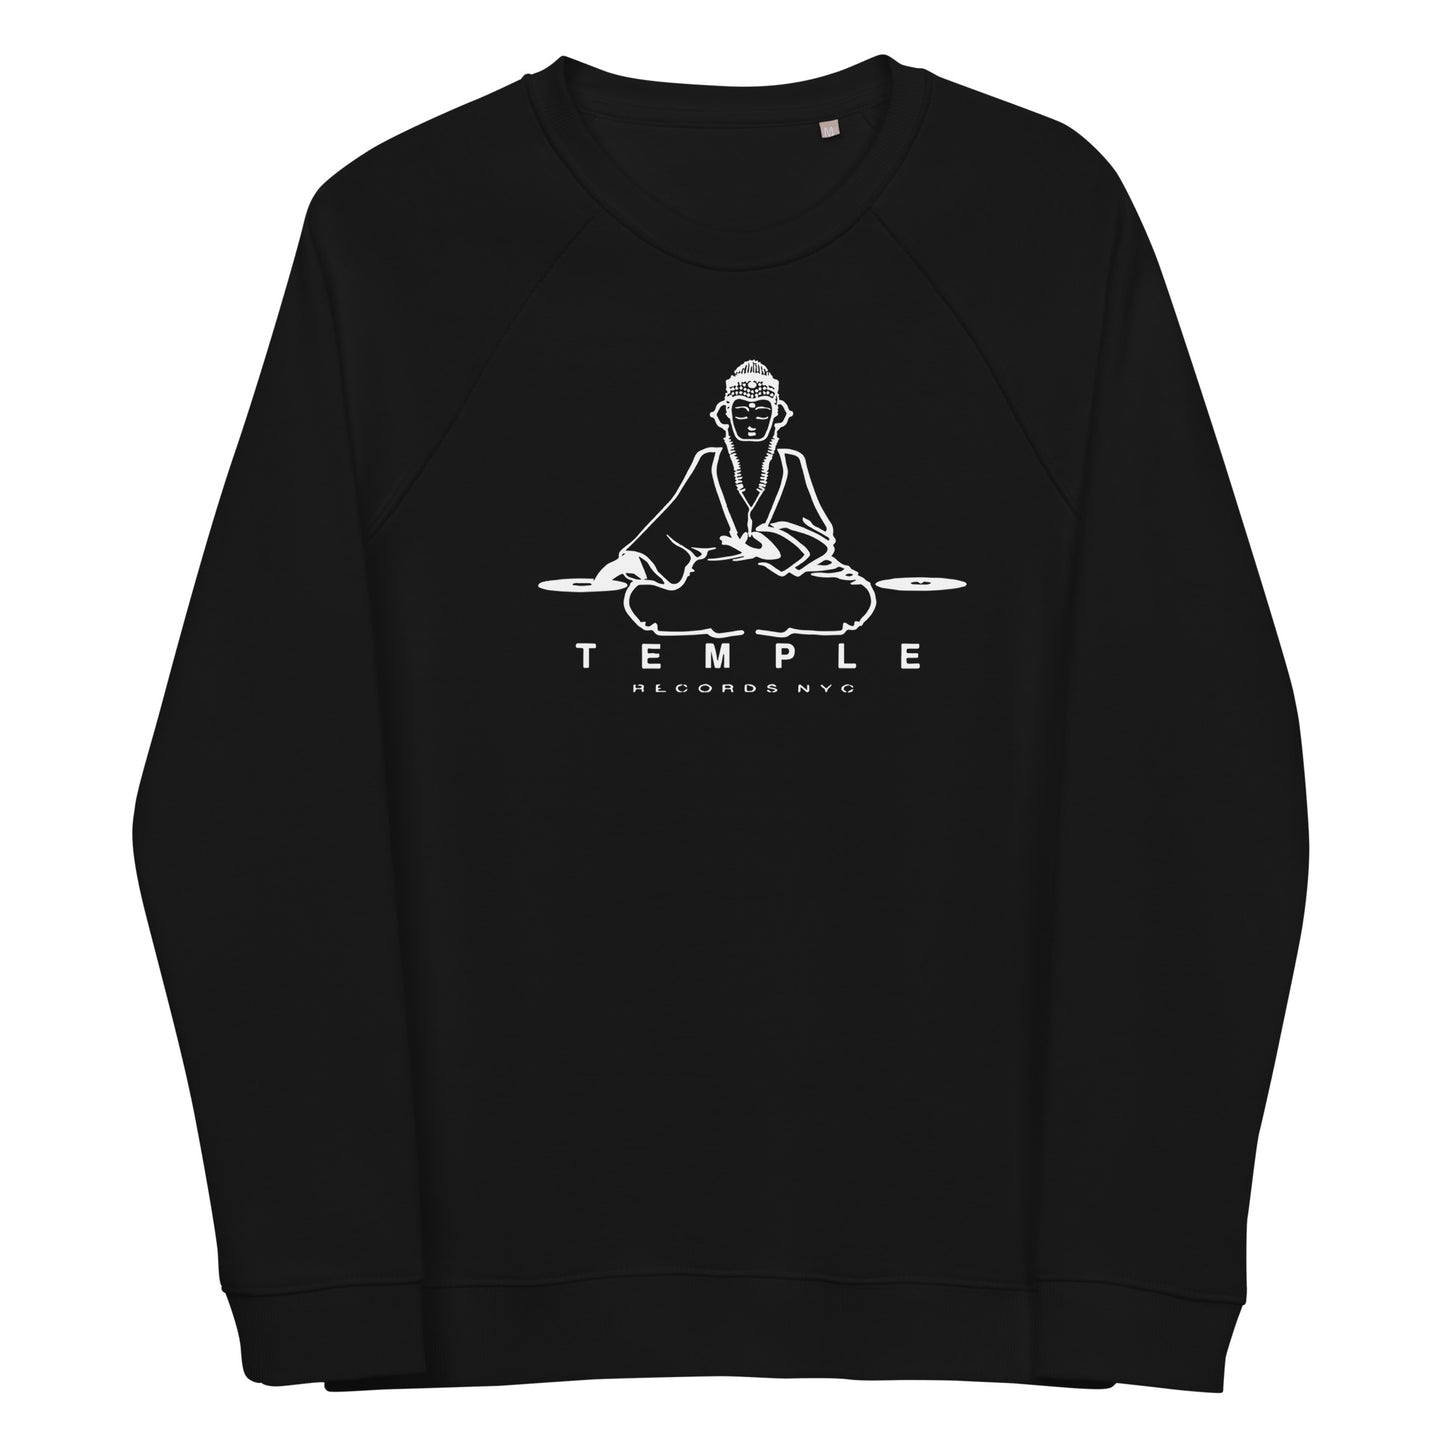 Temple Records NYC Unisex Organic Raglan Sweatshirt